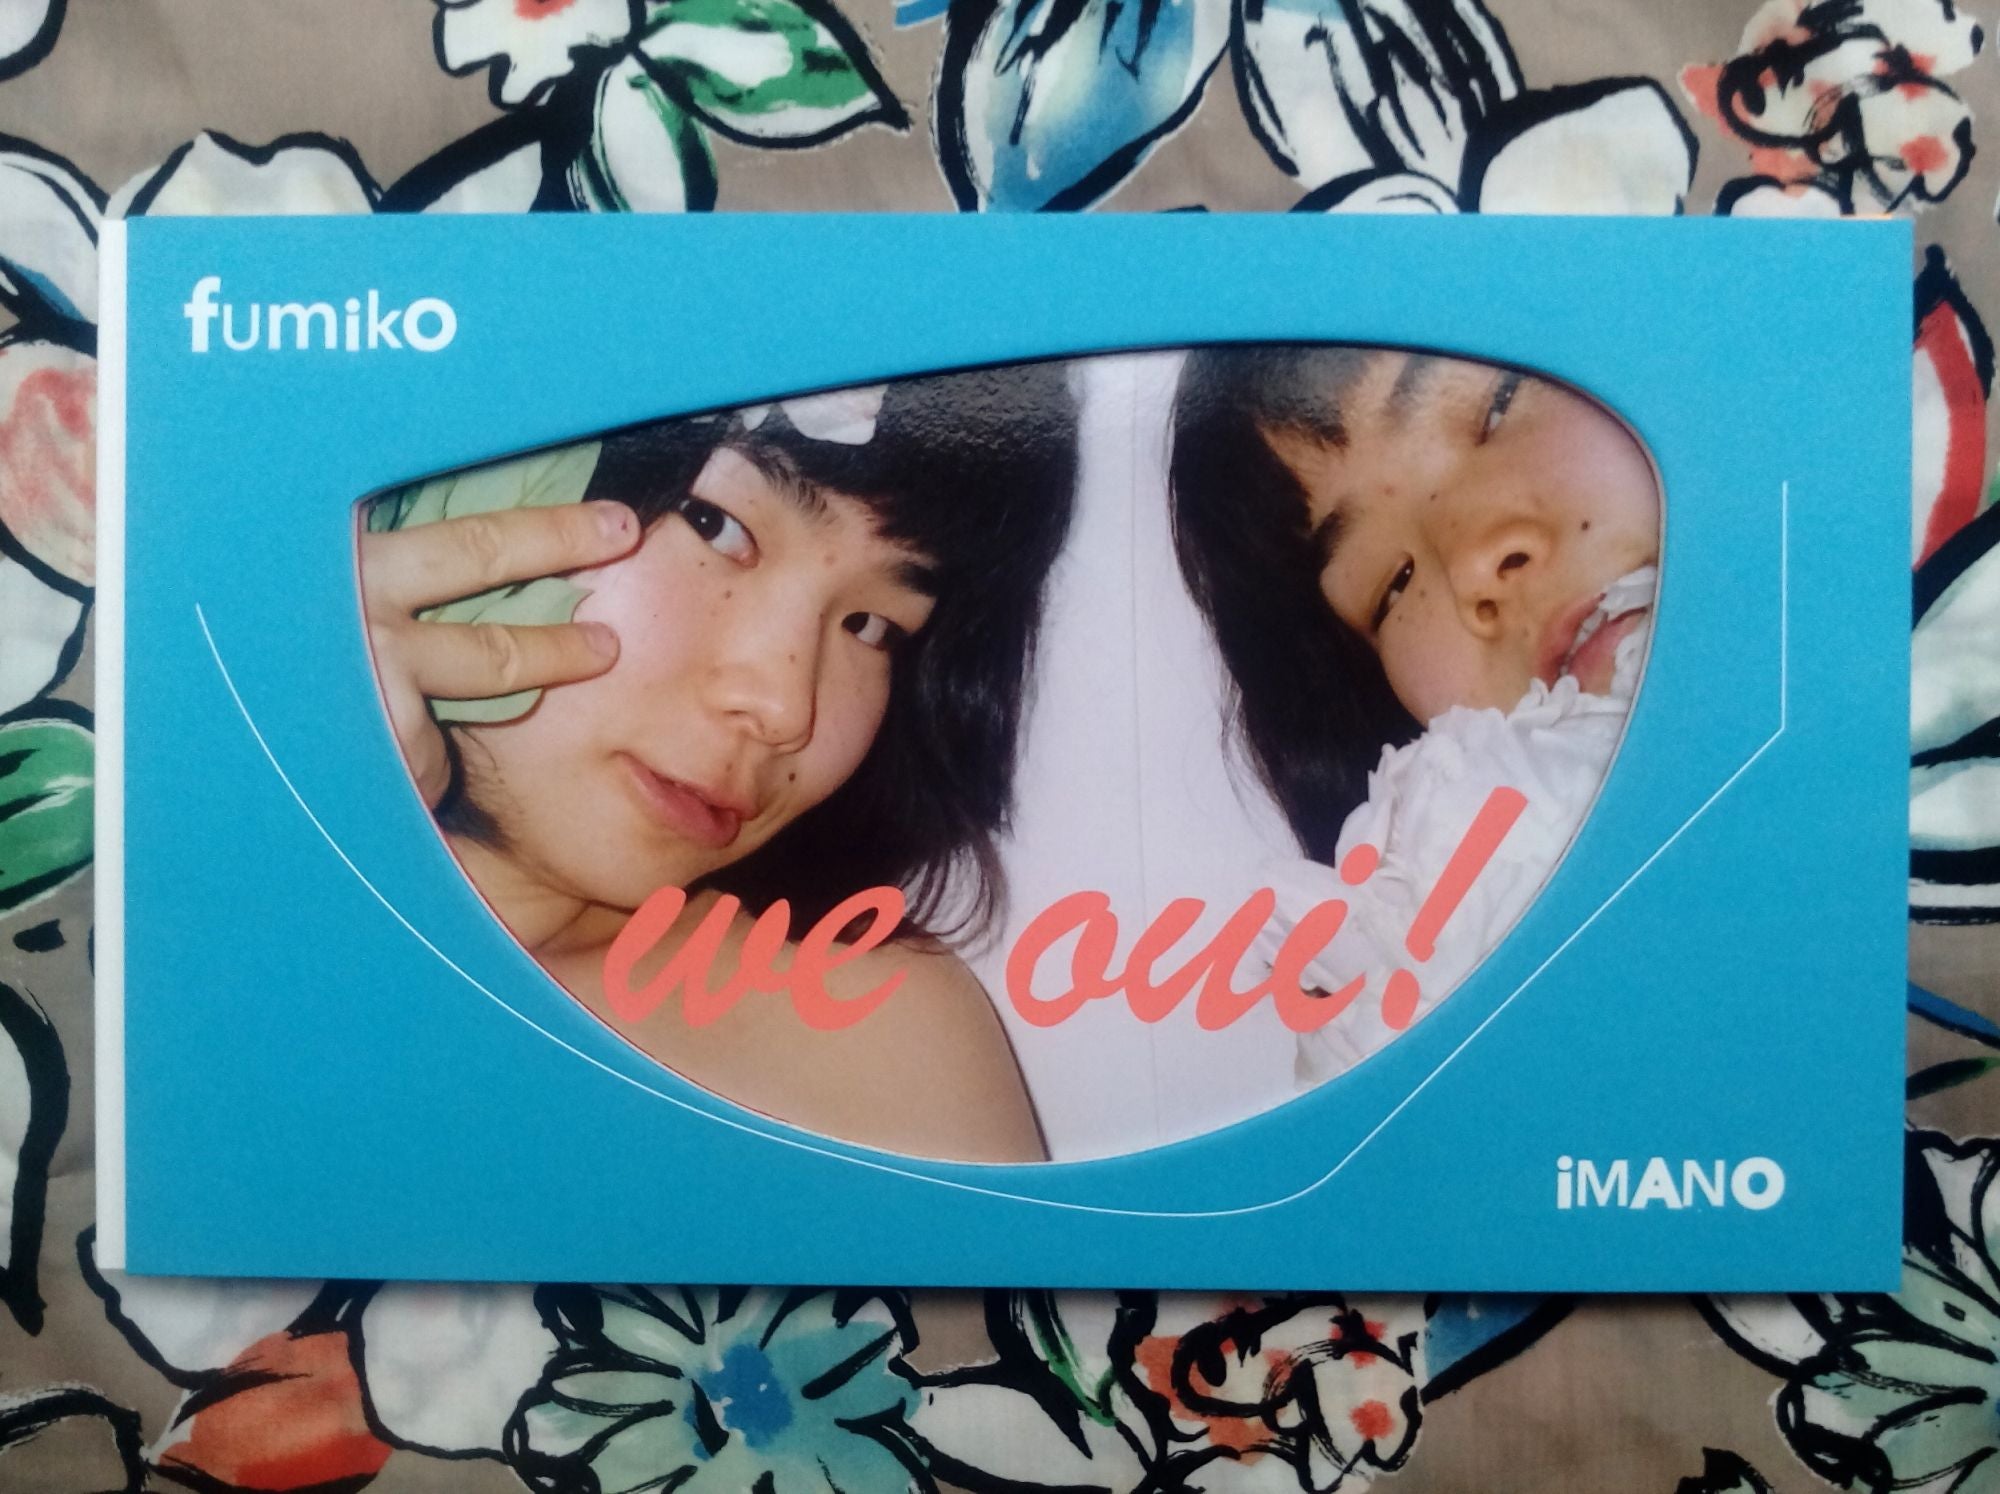 We Oui! | Fumiko Imano | 500 copies